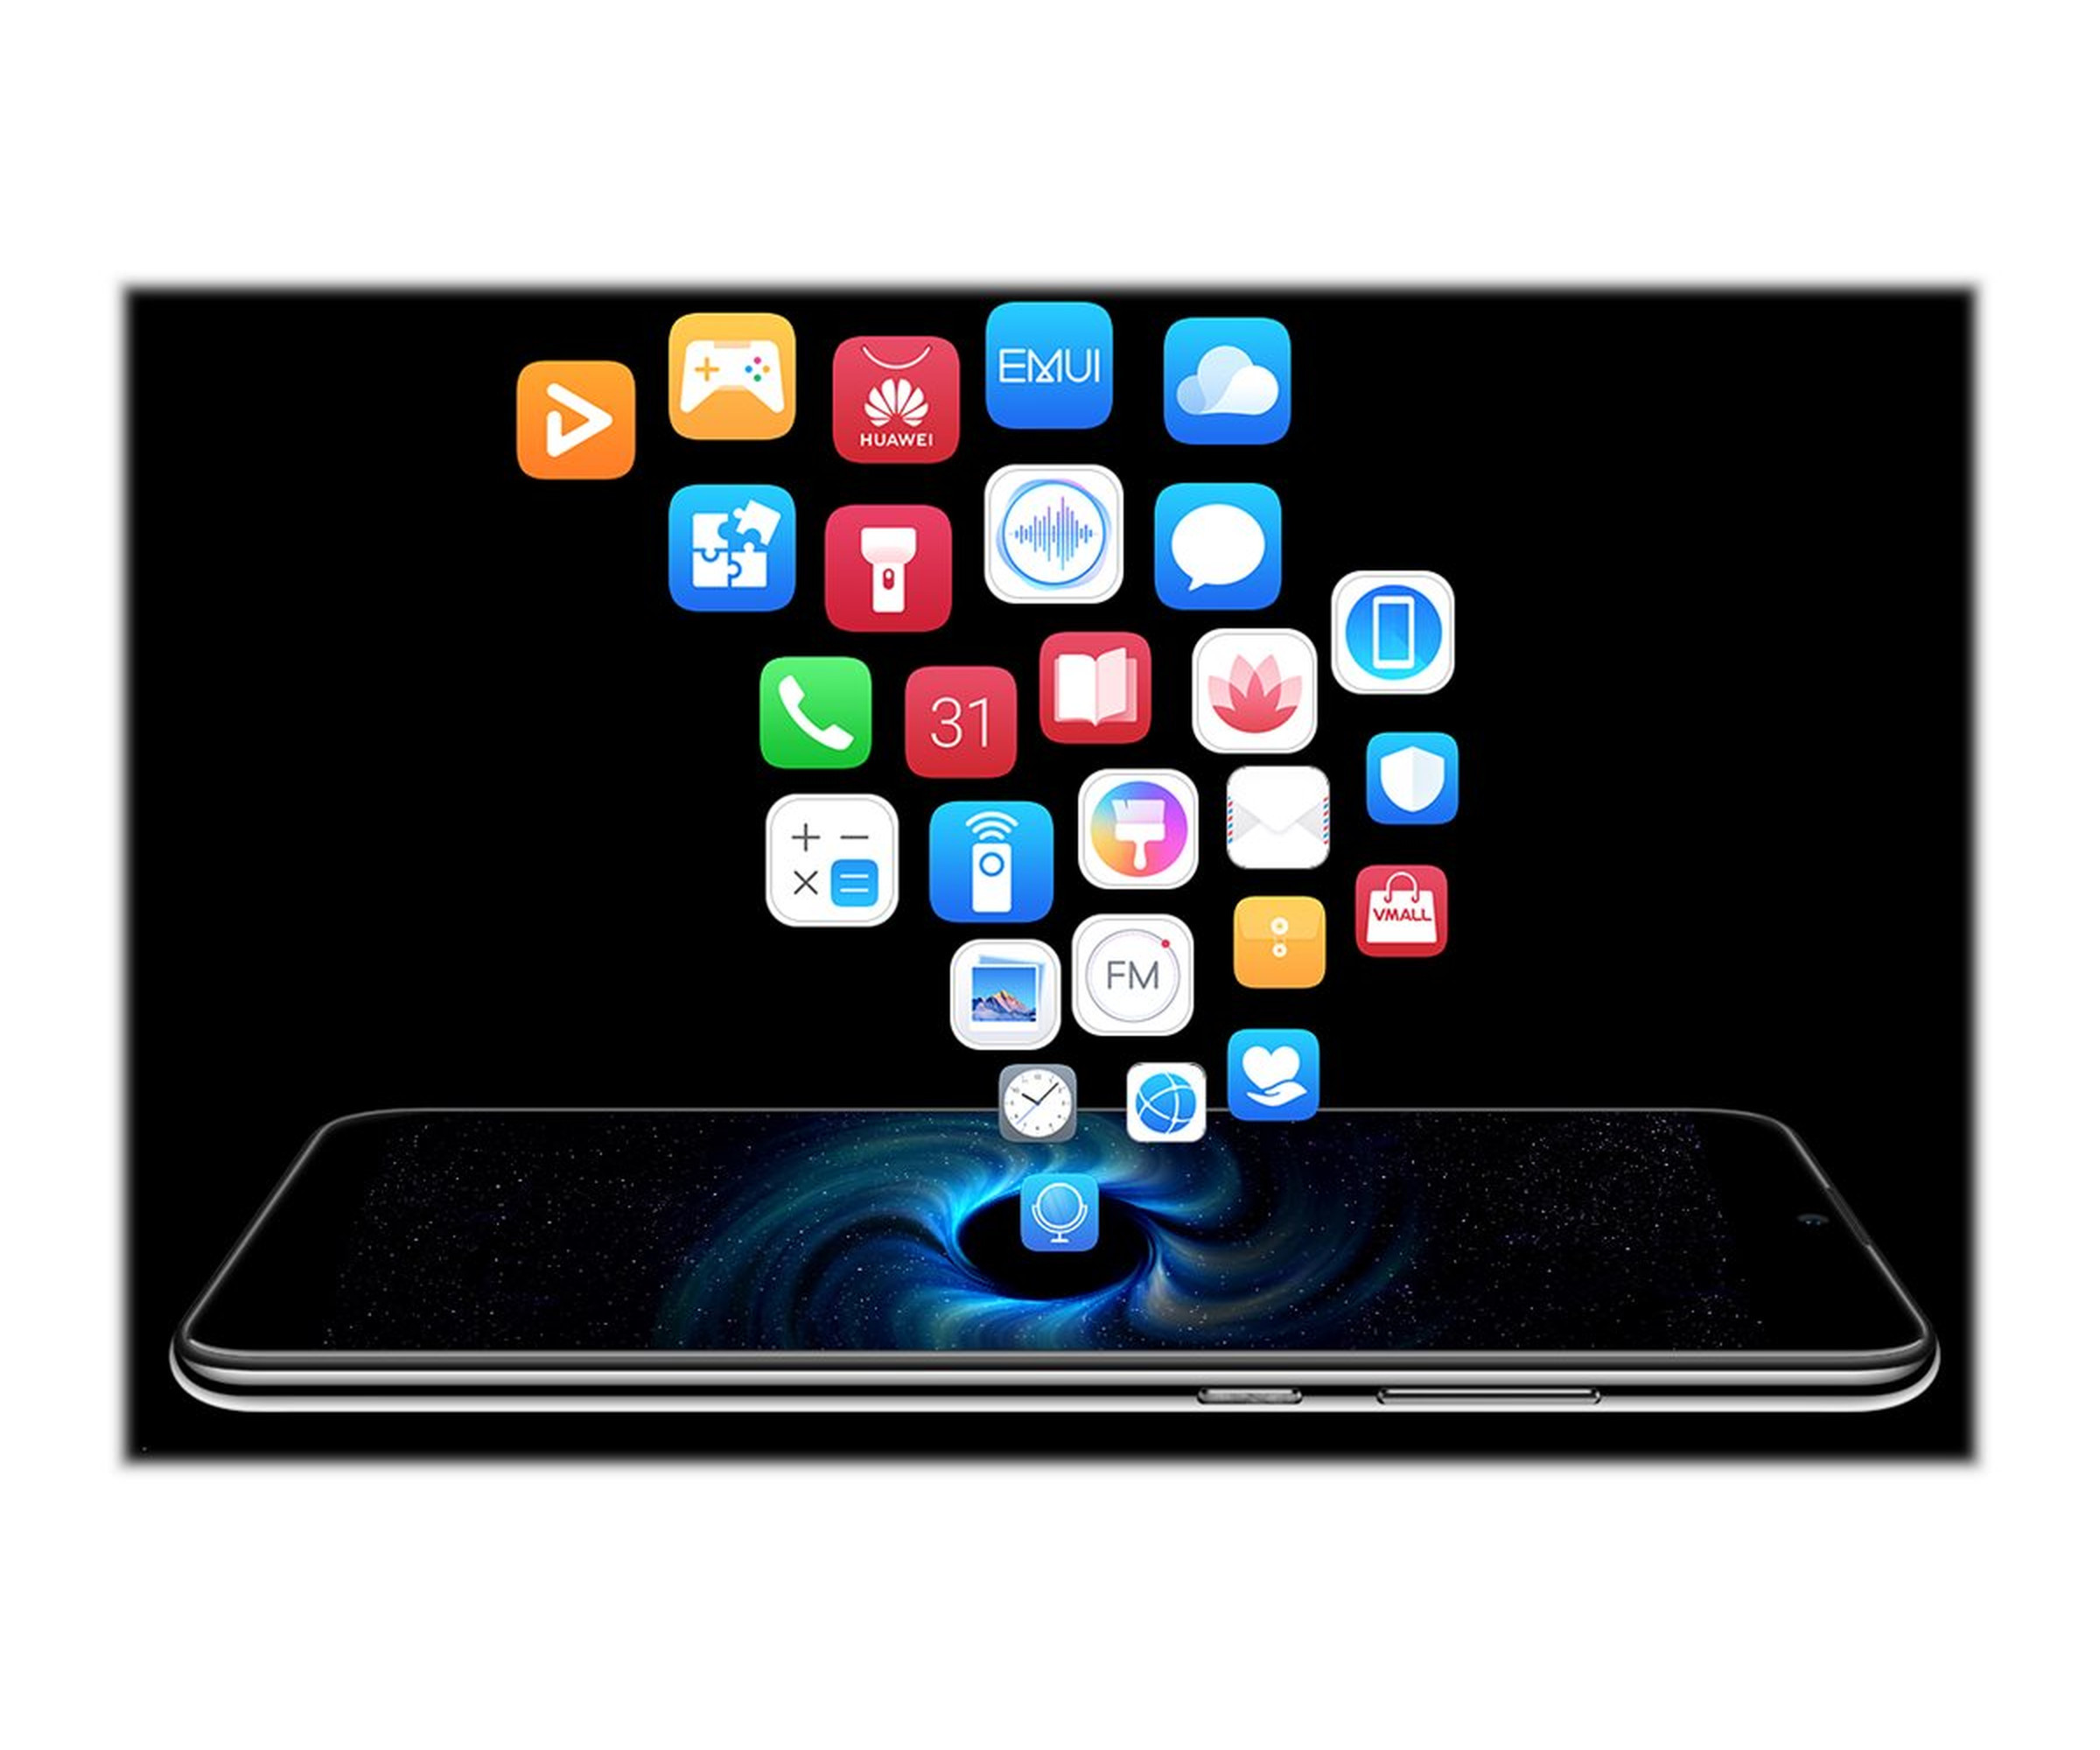 Huawei P smart+ 2019 Midnight Black - Smartphone - 64 GB